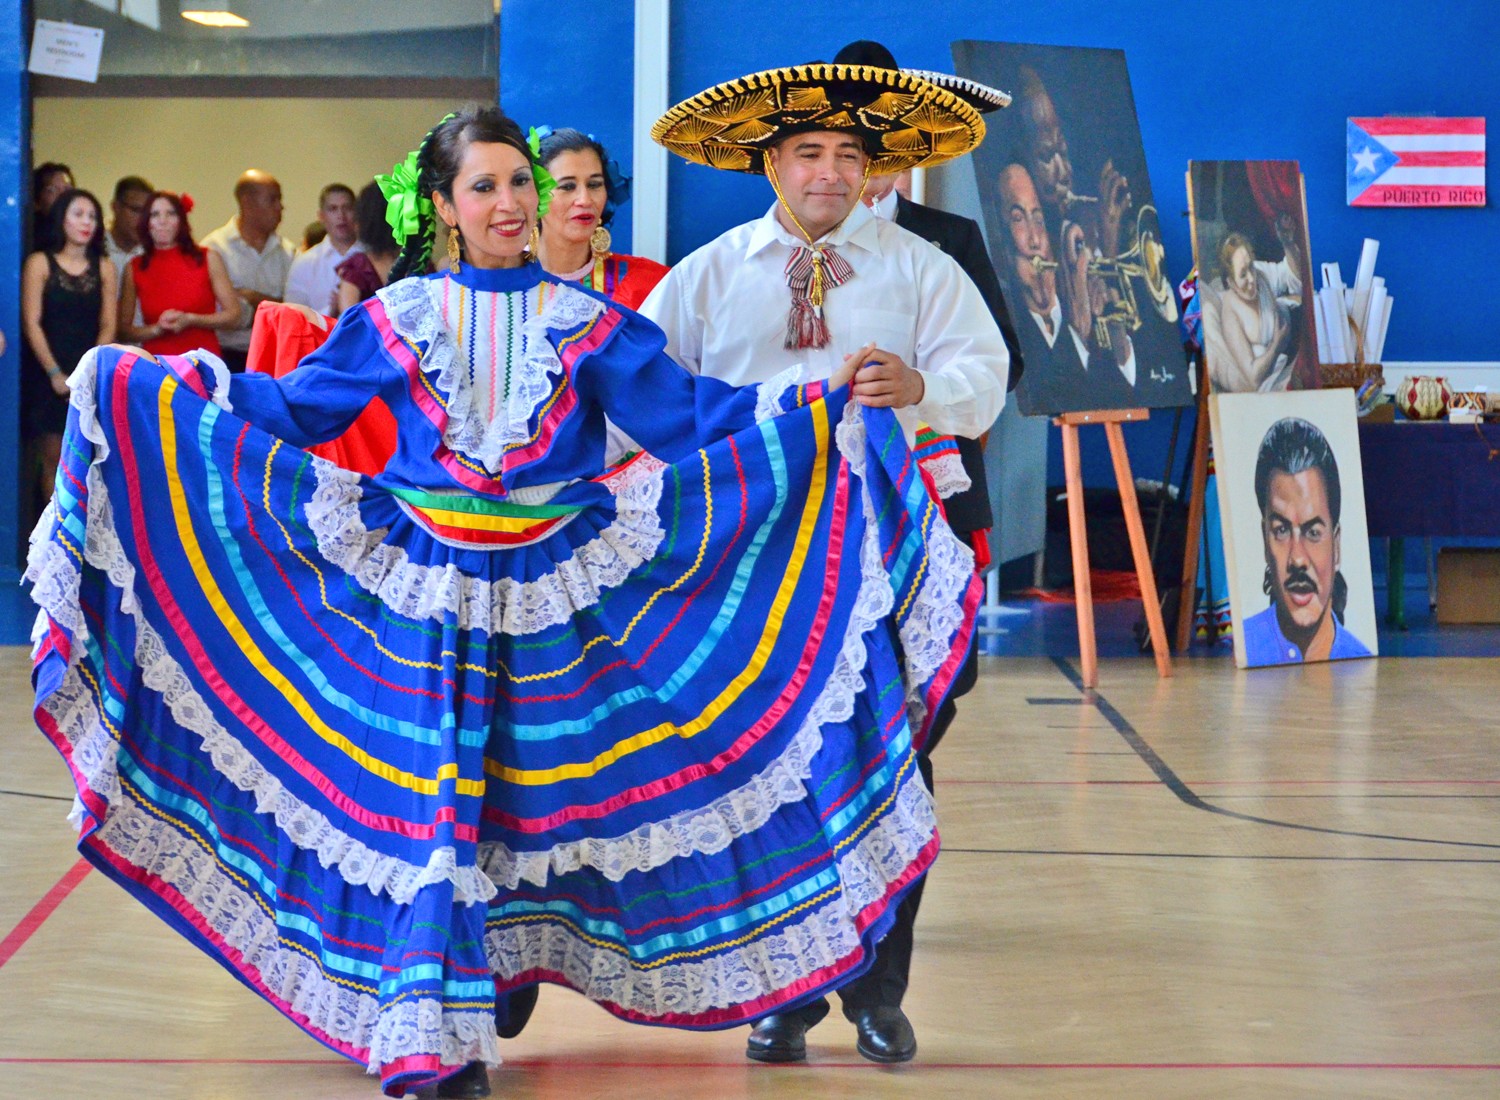 Hispanic Heritage Month Feature—Roberto Clemente